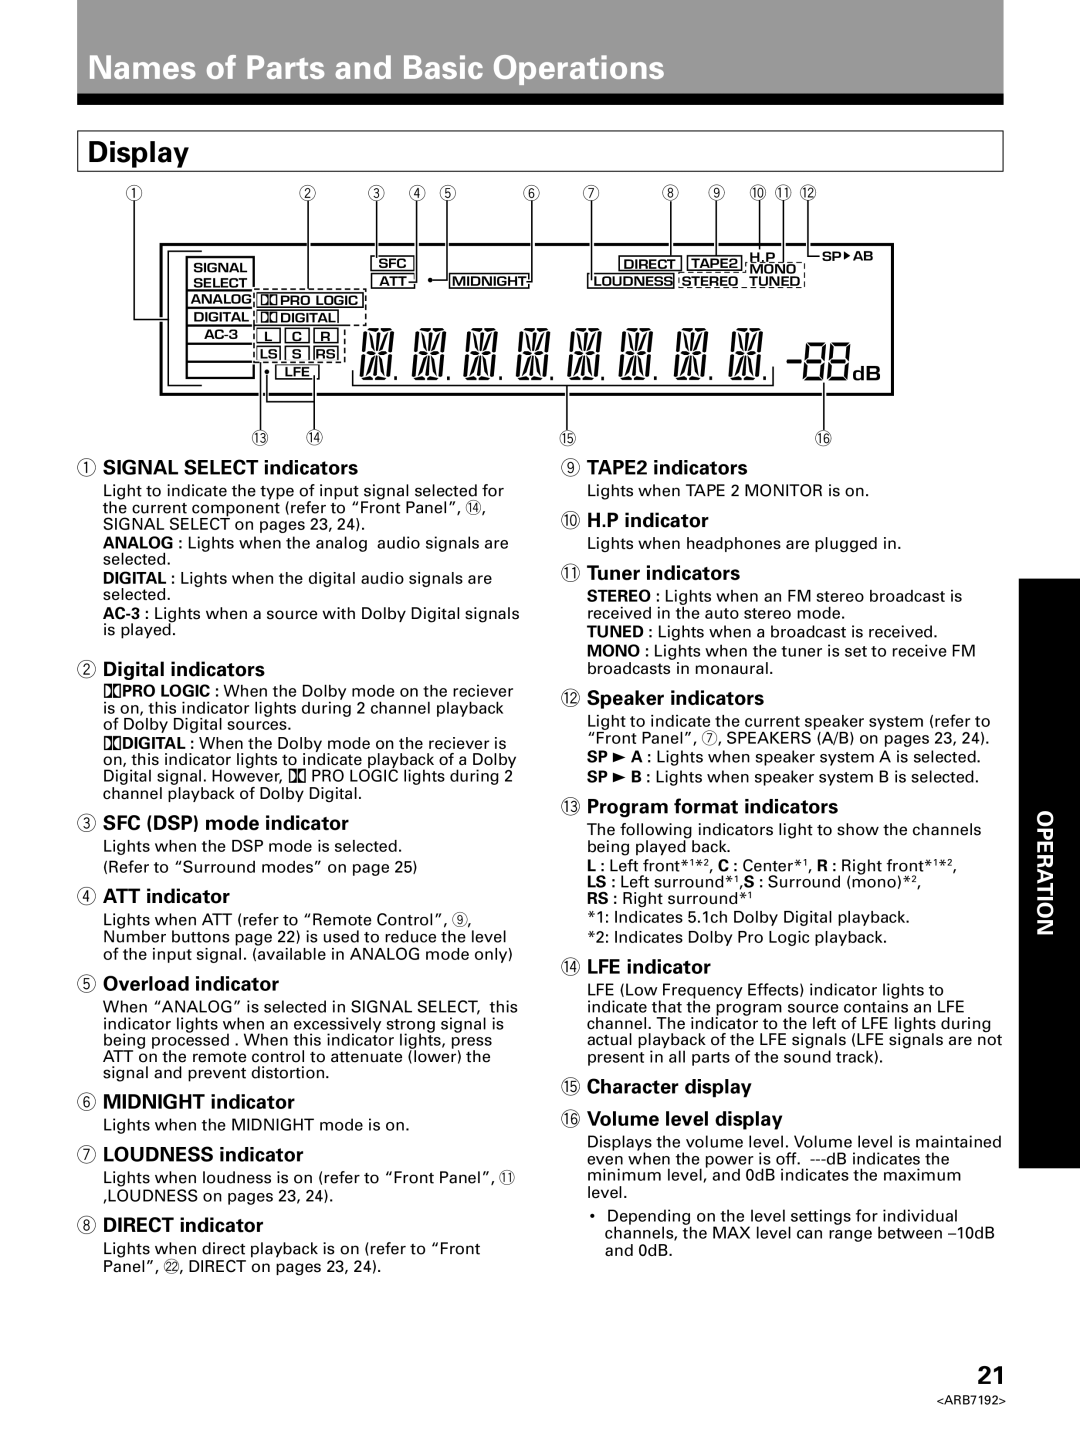 Pioneer VSX-D498 Names of Parts and Basic Operations, Display, SIGNAL SELECT indicators, 2Digital indicators 